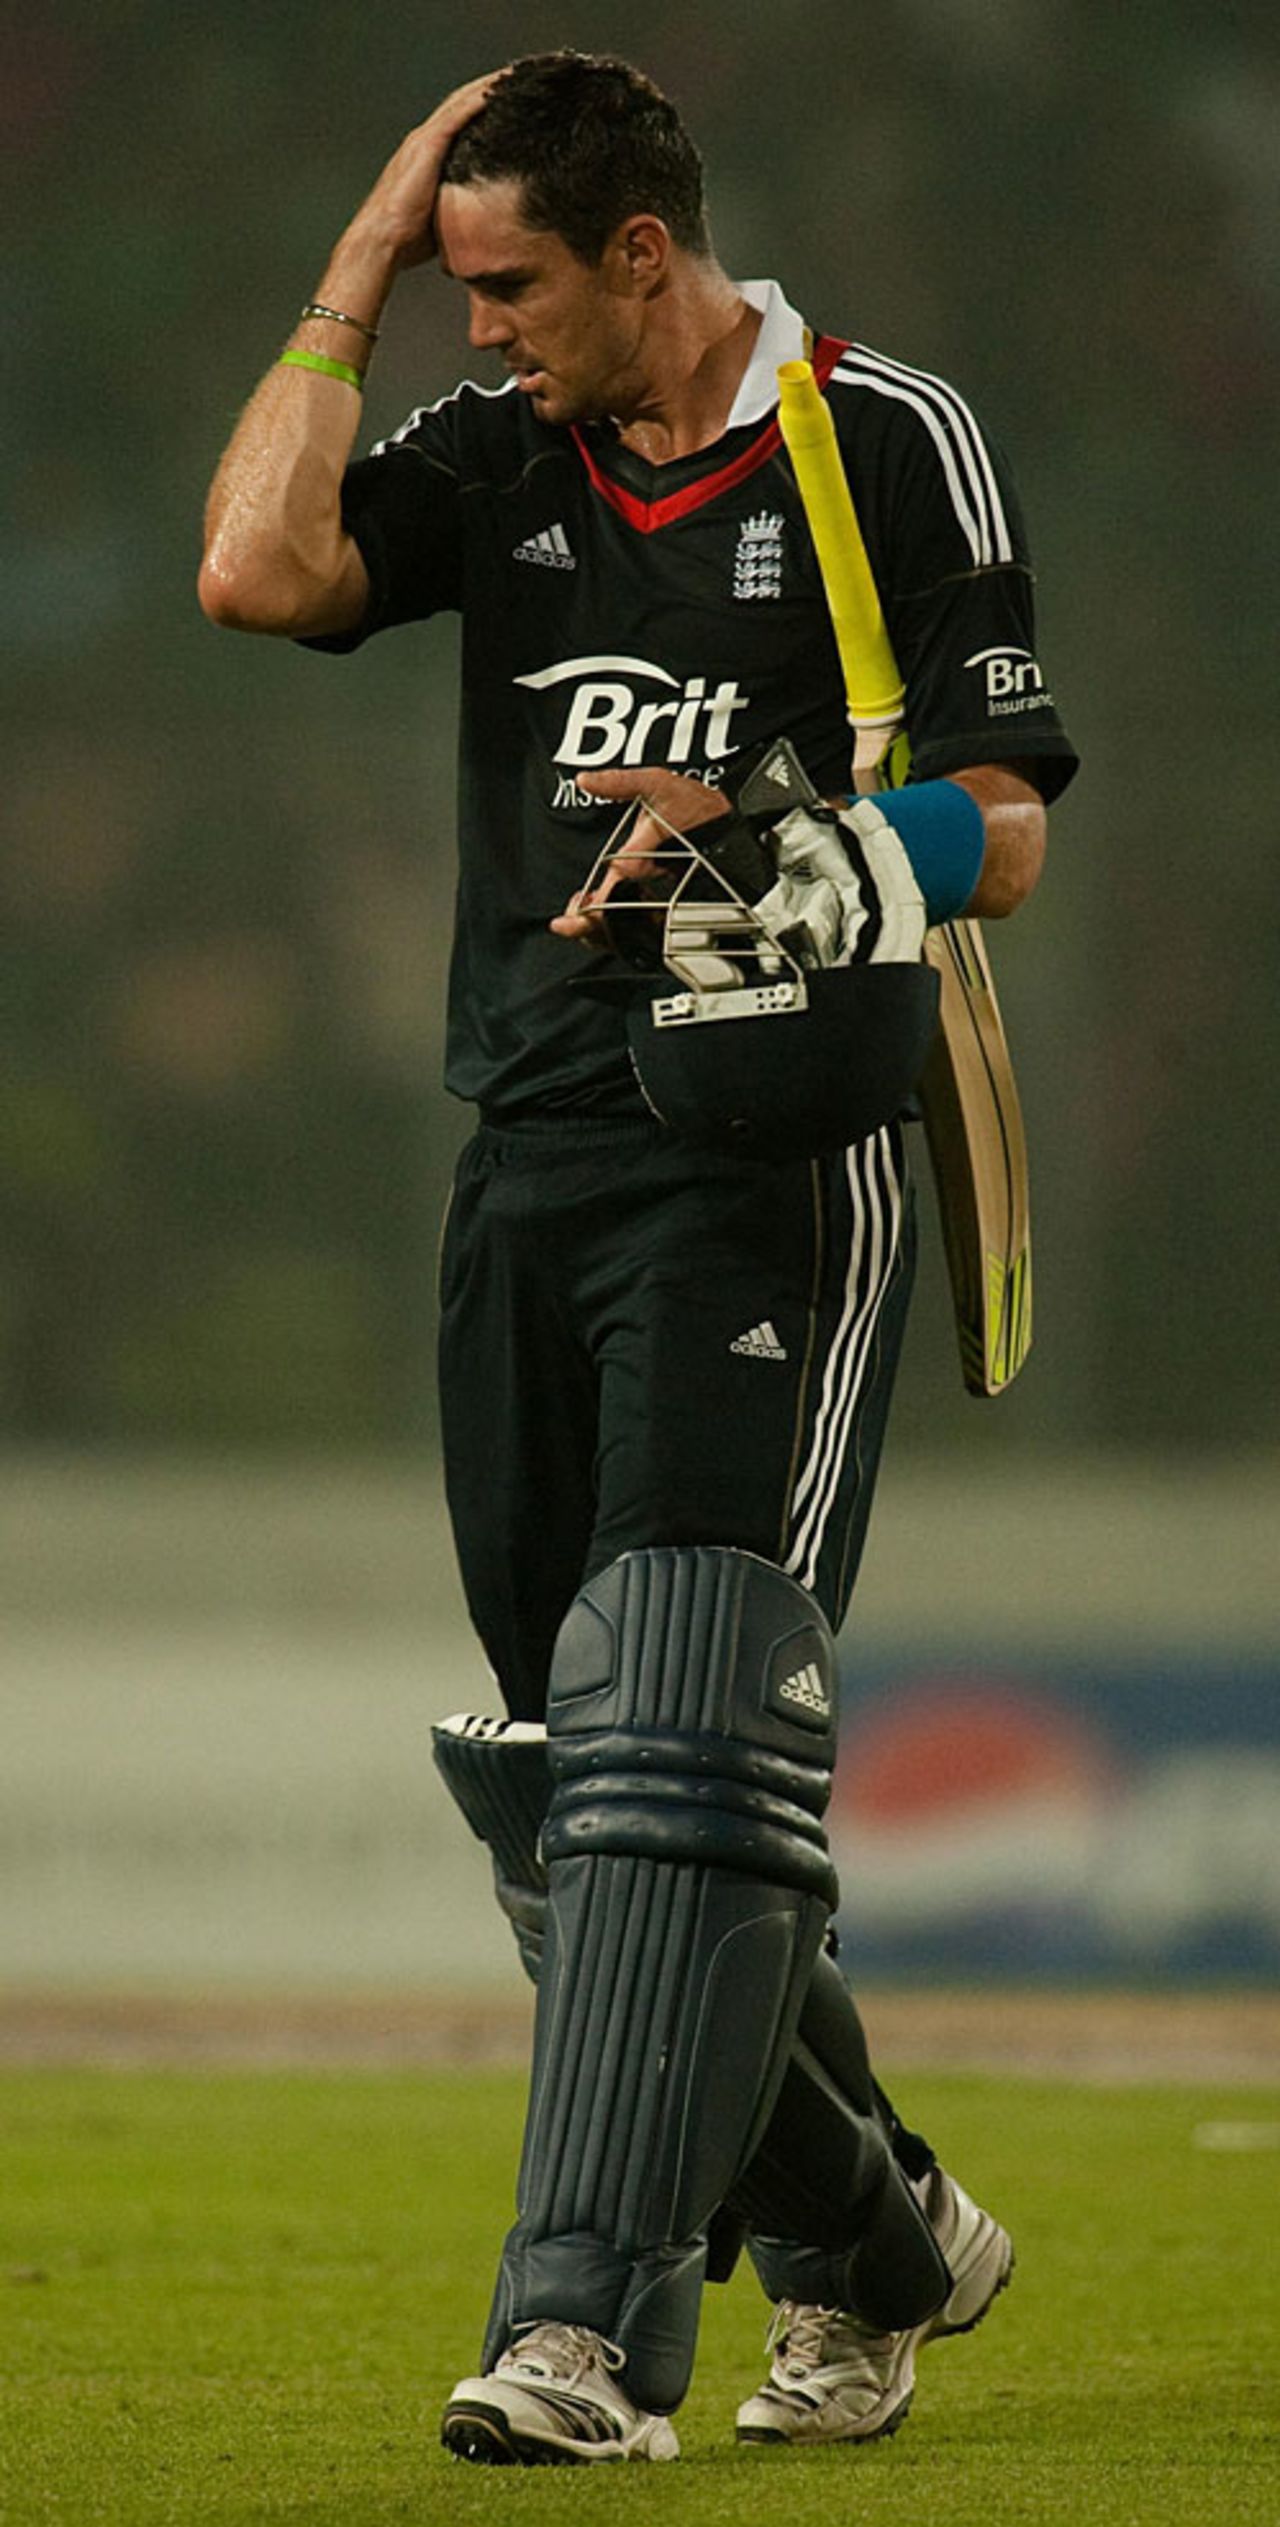 Kevin Pietersen was again left in rueful mood after struggling, Bangladesh v England, 2nd ODI, Dhaka, March 2, 2010